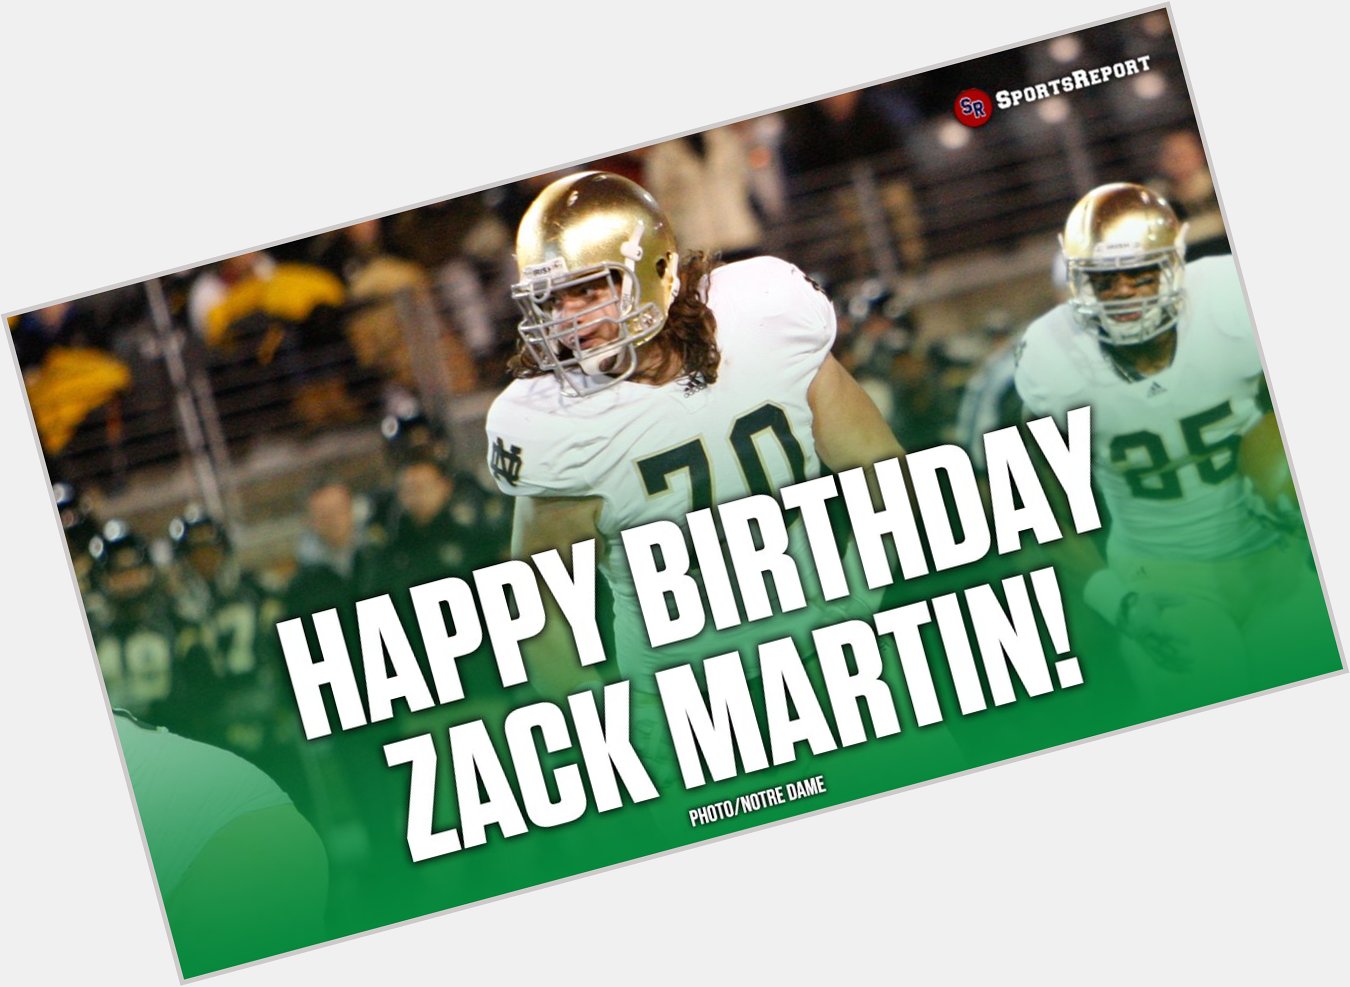  Fans, let\s wish Zack Martin a Happy Birthday! 